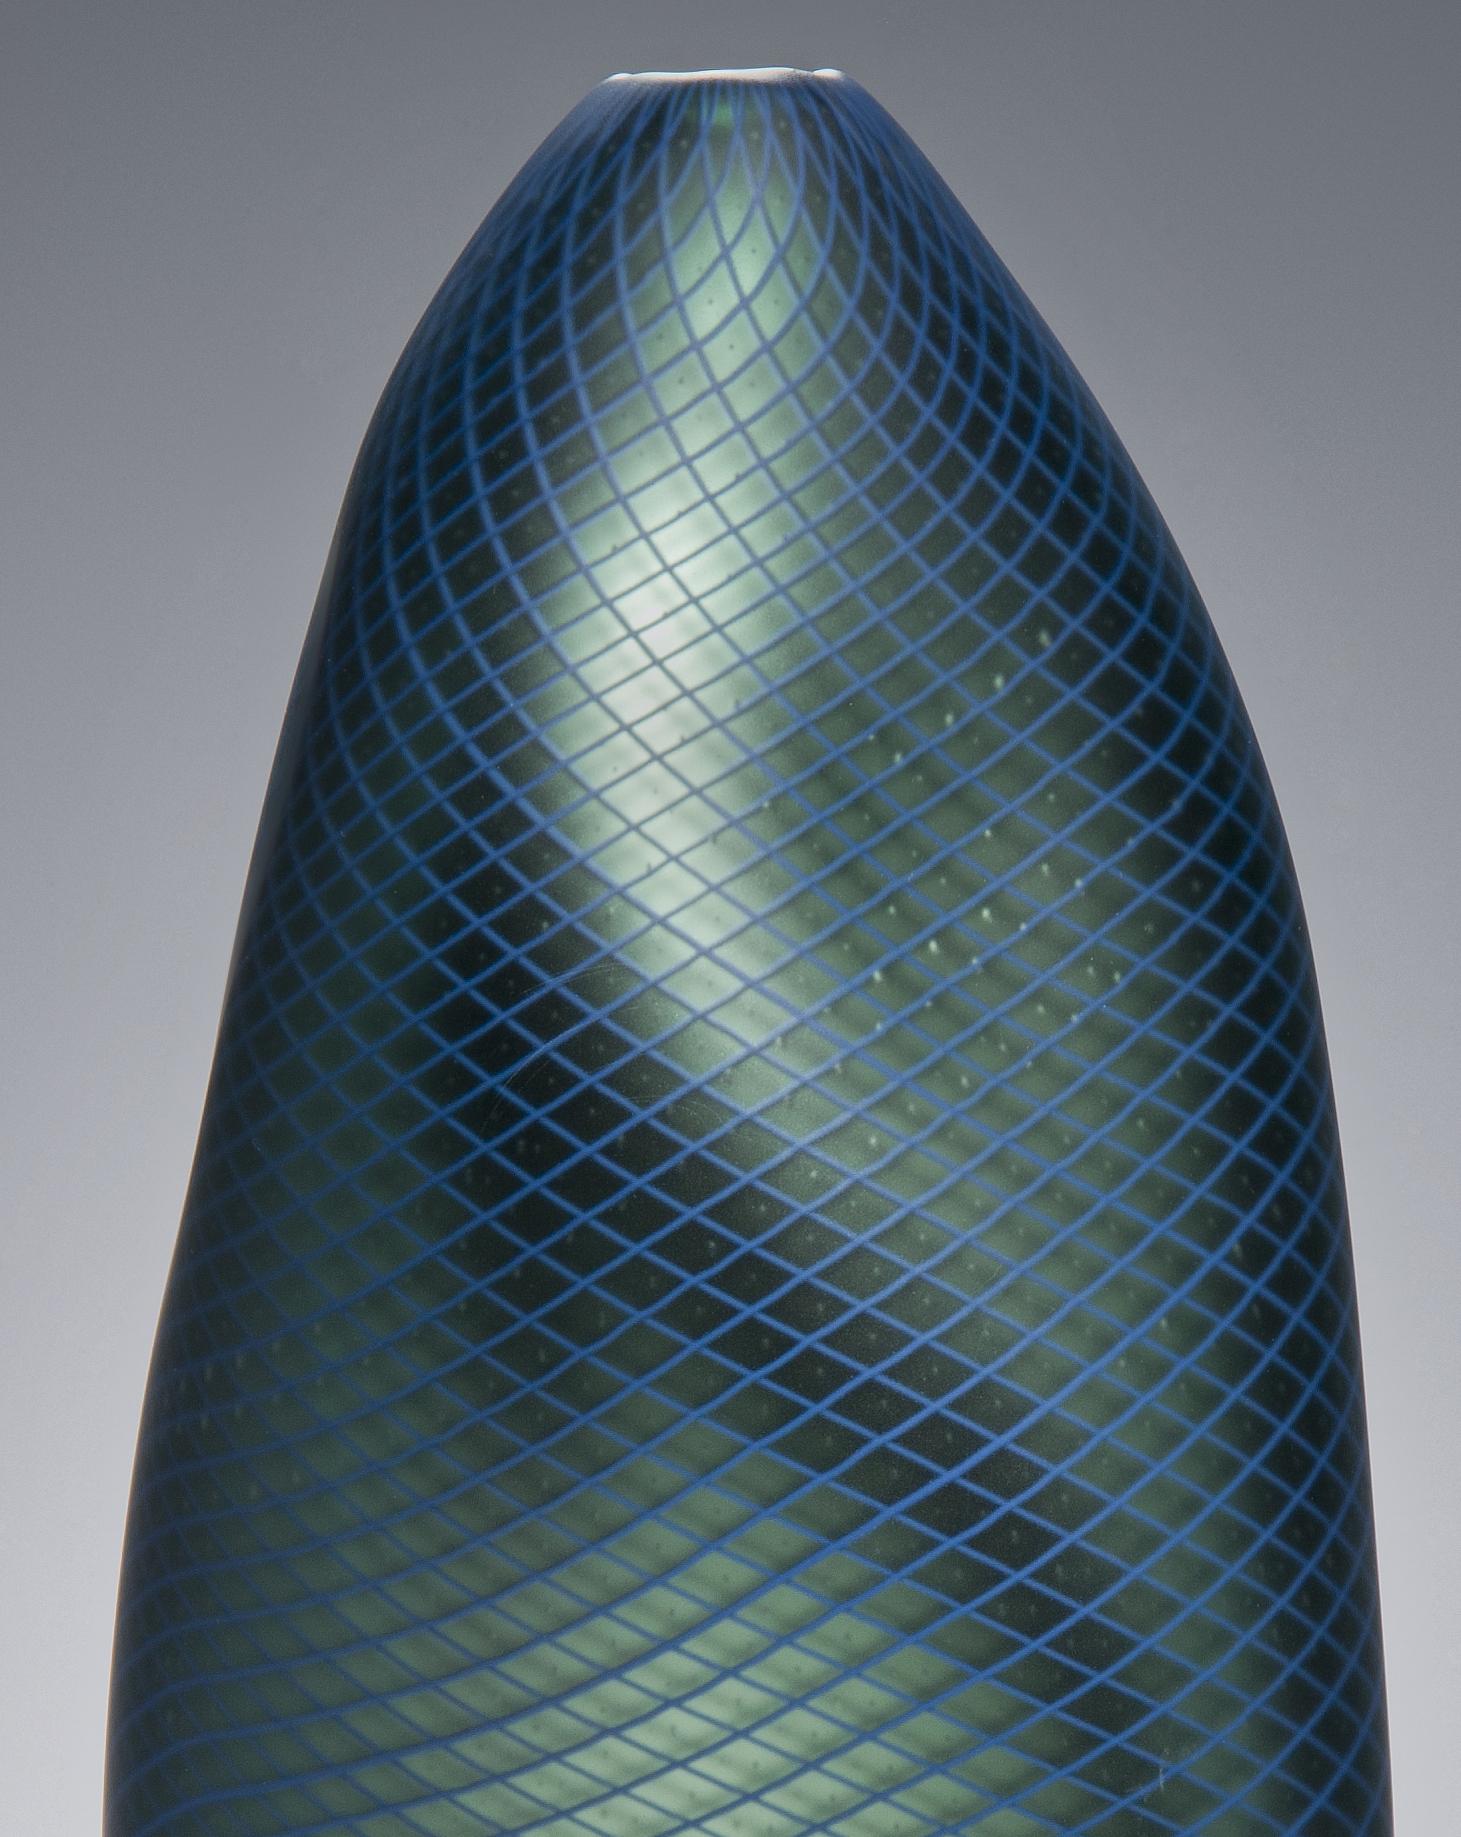 Contemporary Stratiform Ferro Reticello 001, a unique glass sculpture in teal by Liam Reeves